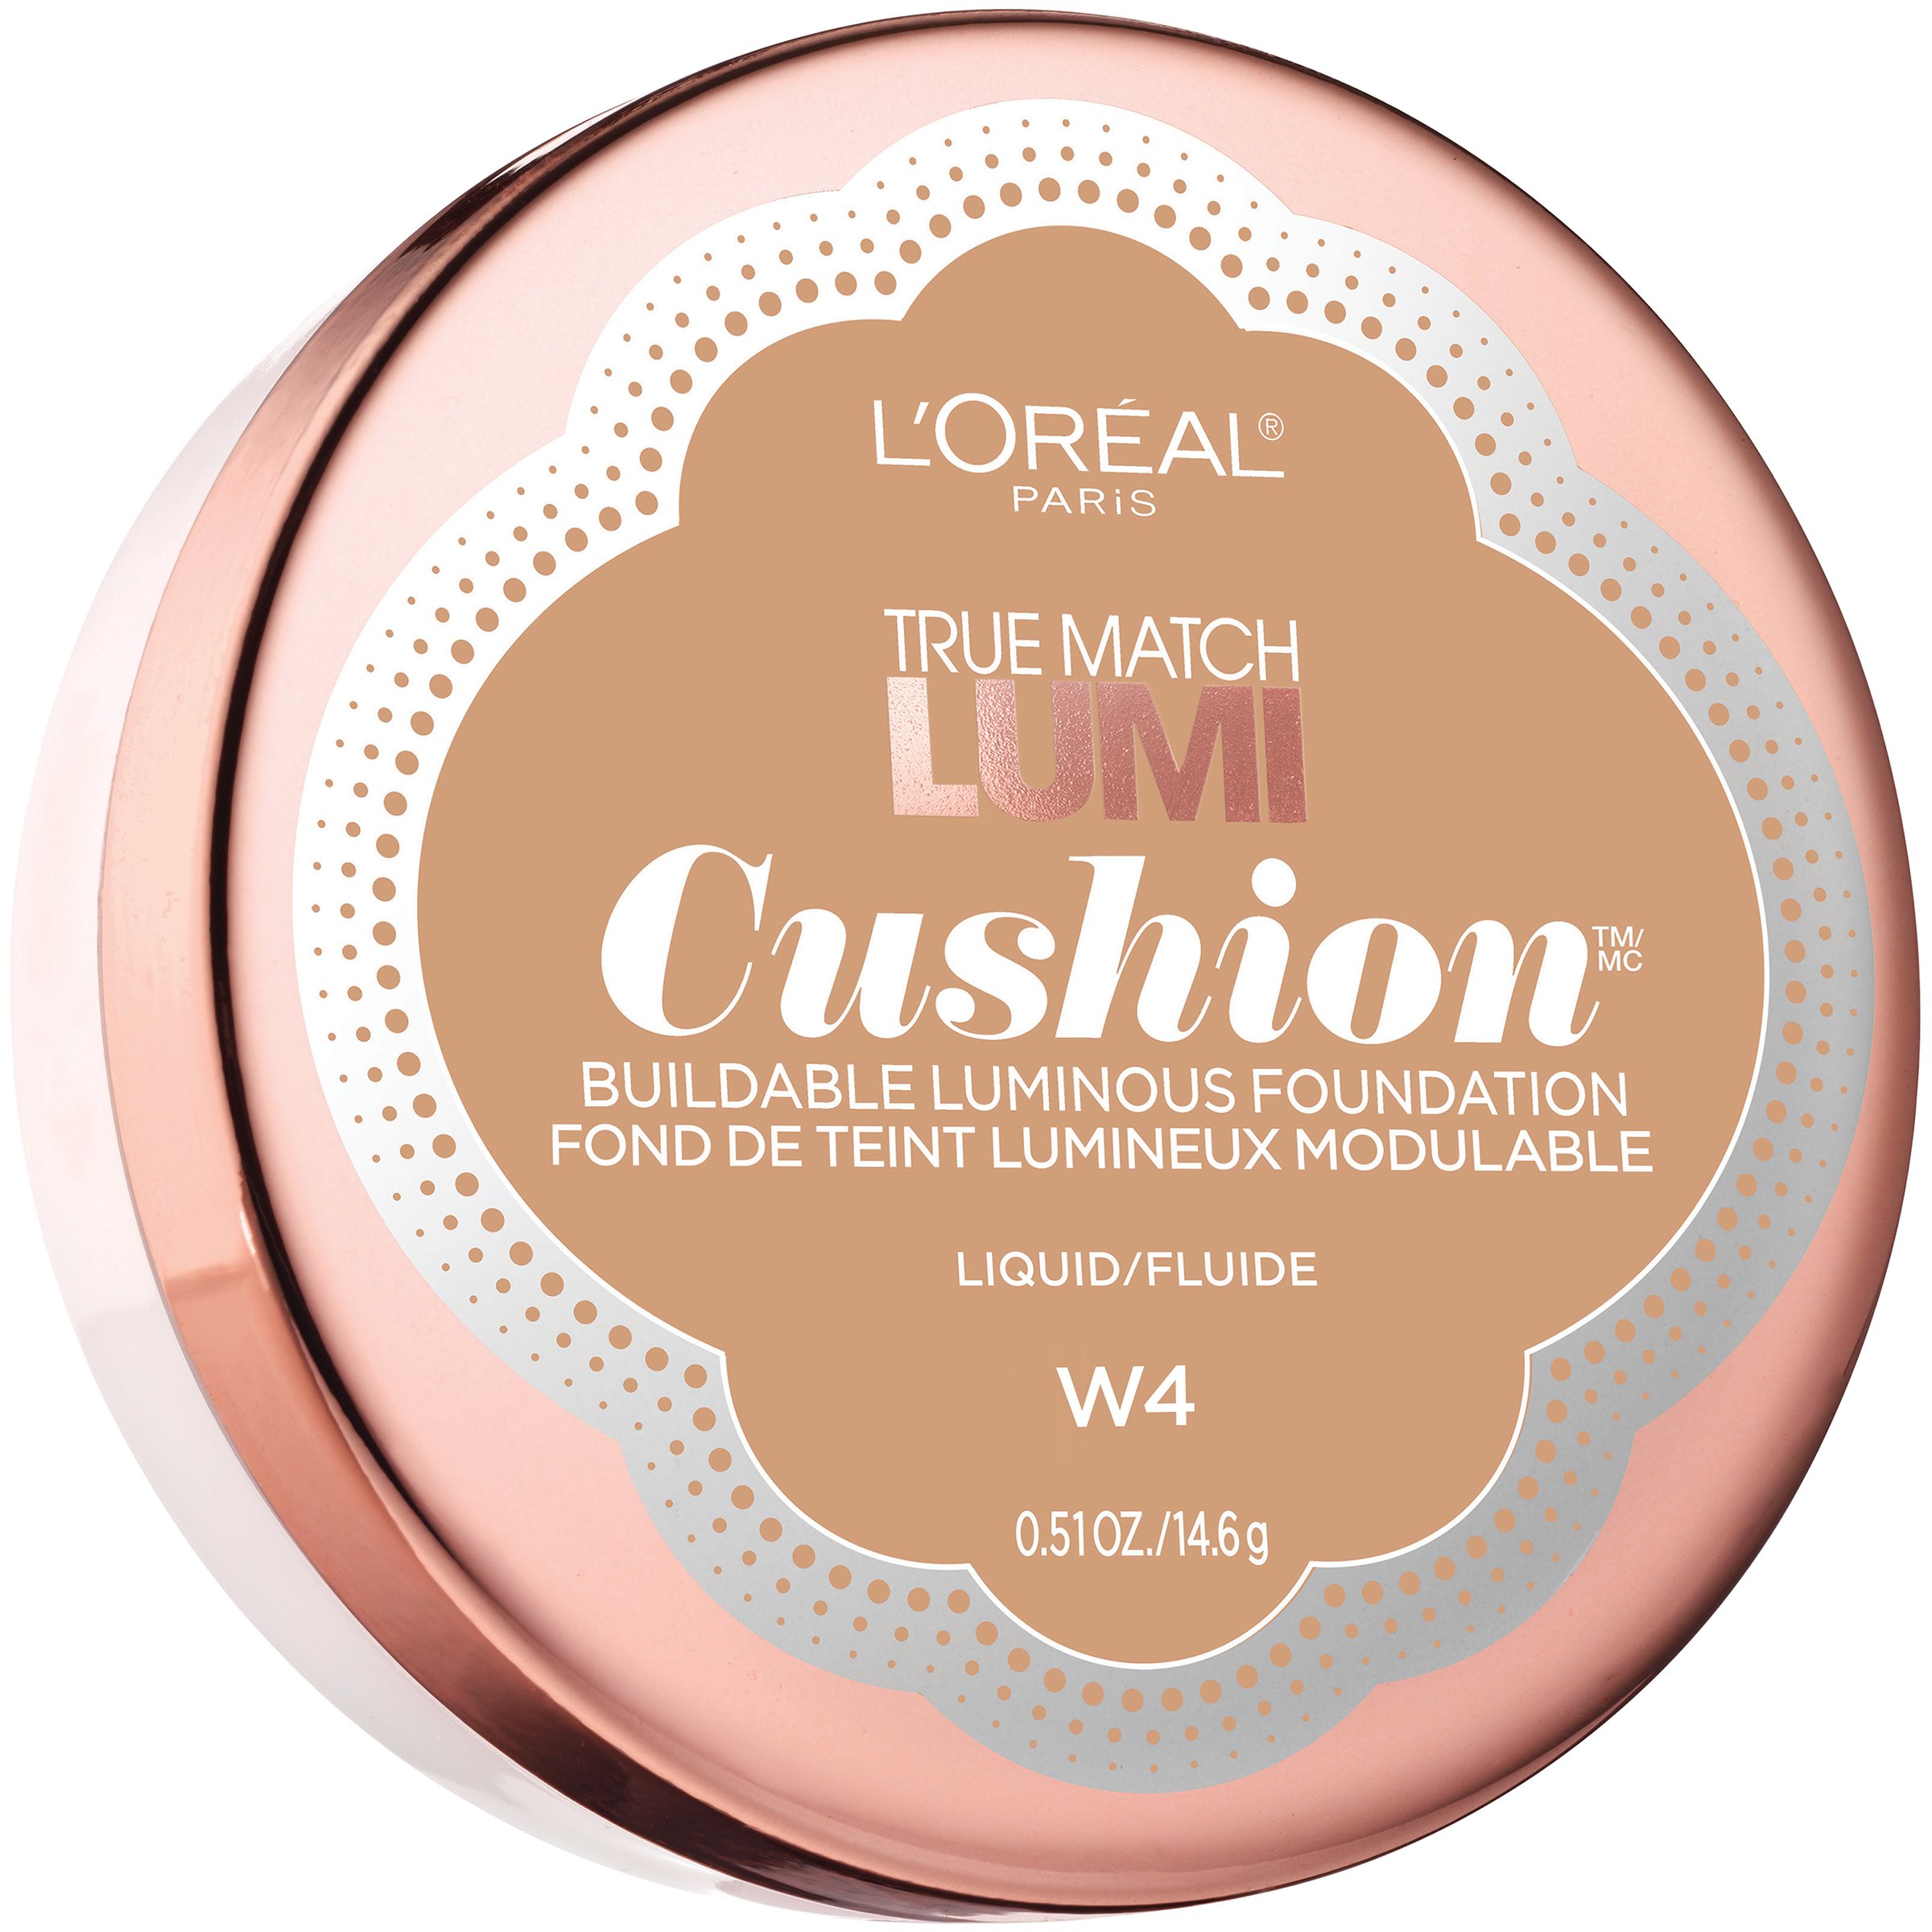 L'Oréal Paris True Match Lumi Cushion Foundation, W4 Natural Beige, 0.51 oz.